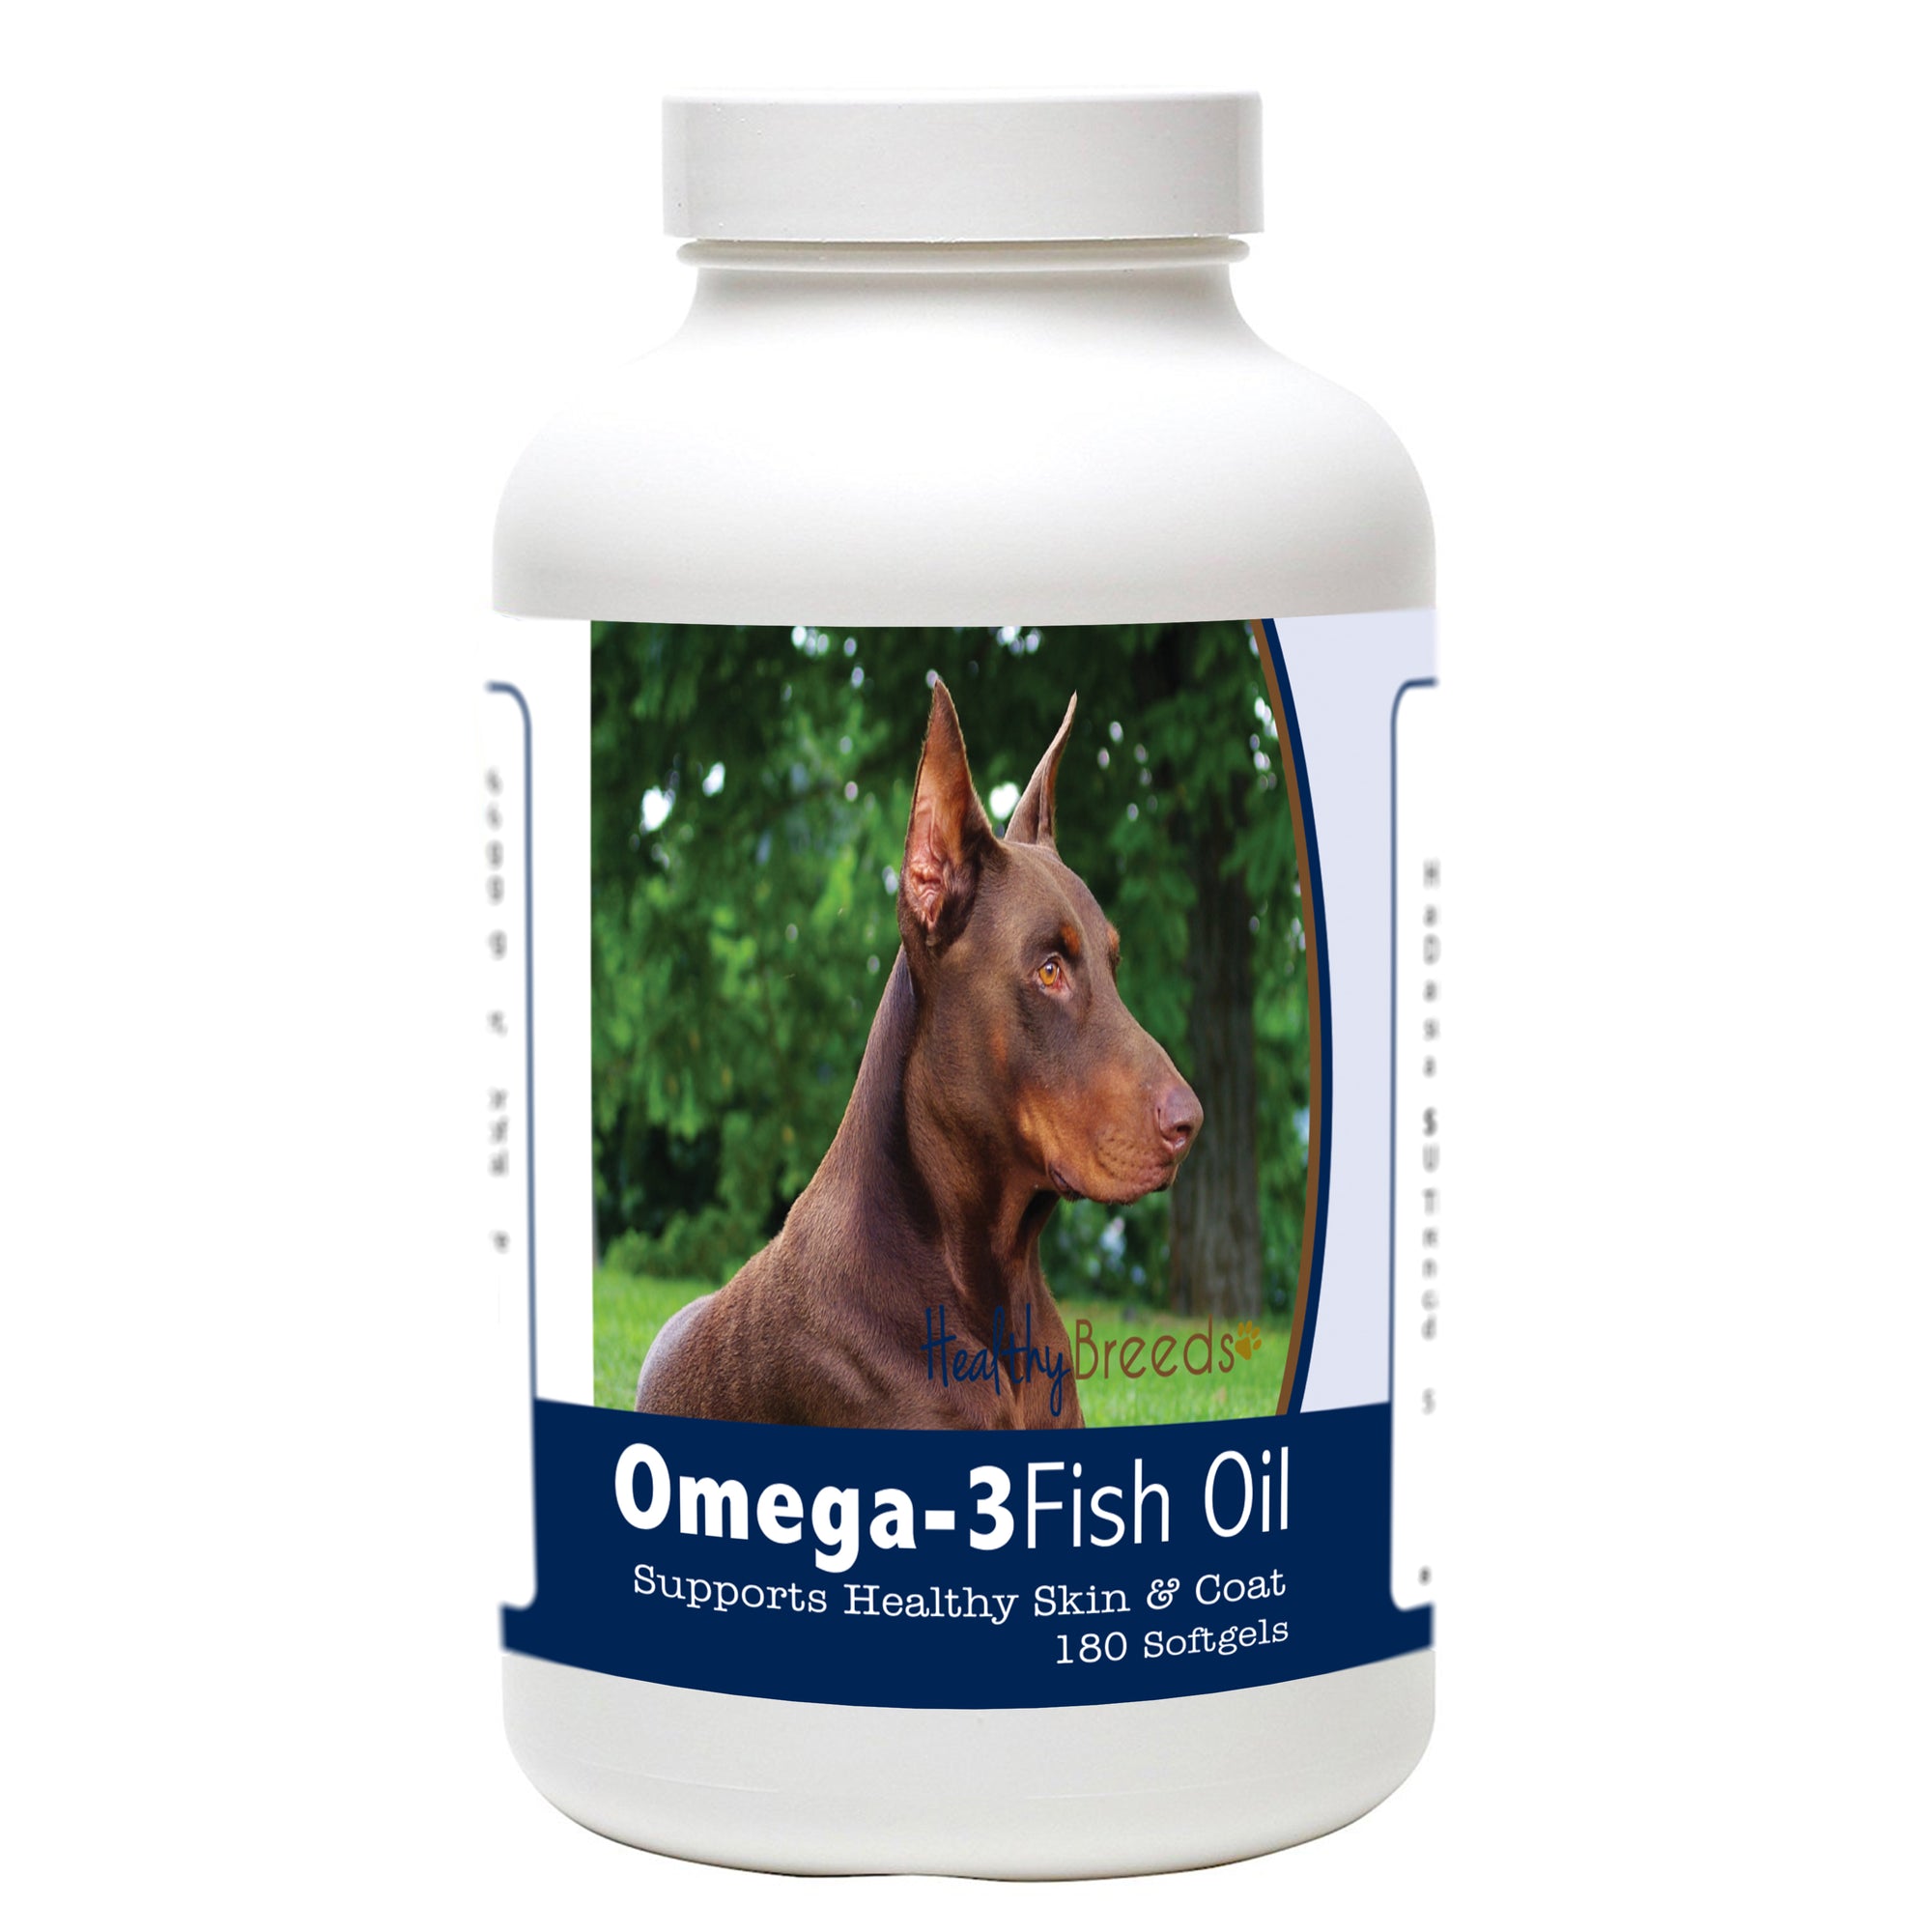 Healthy Breeds Doberman Pinscher Omega-3 Fish Oil Softgels 180 Count